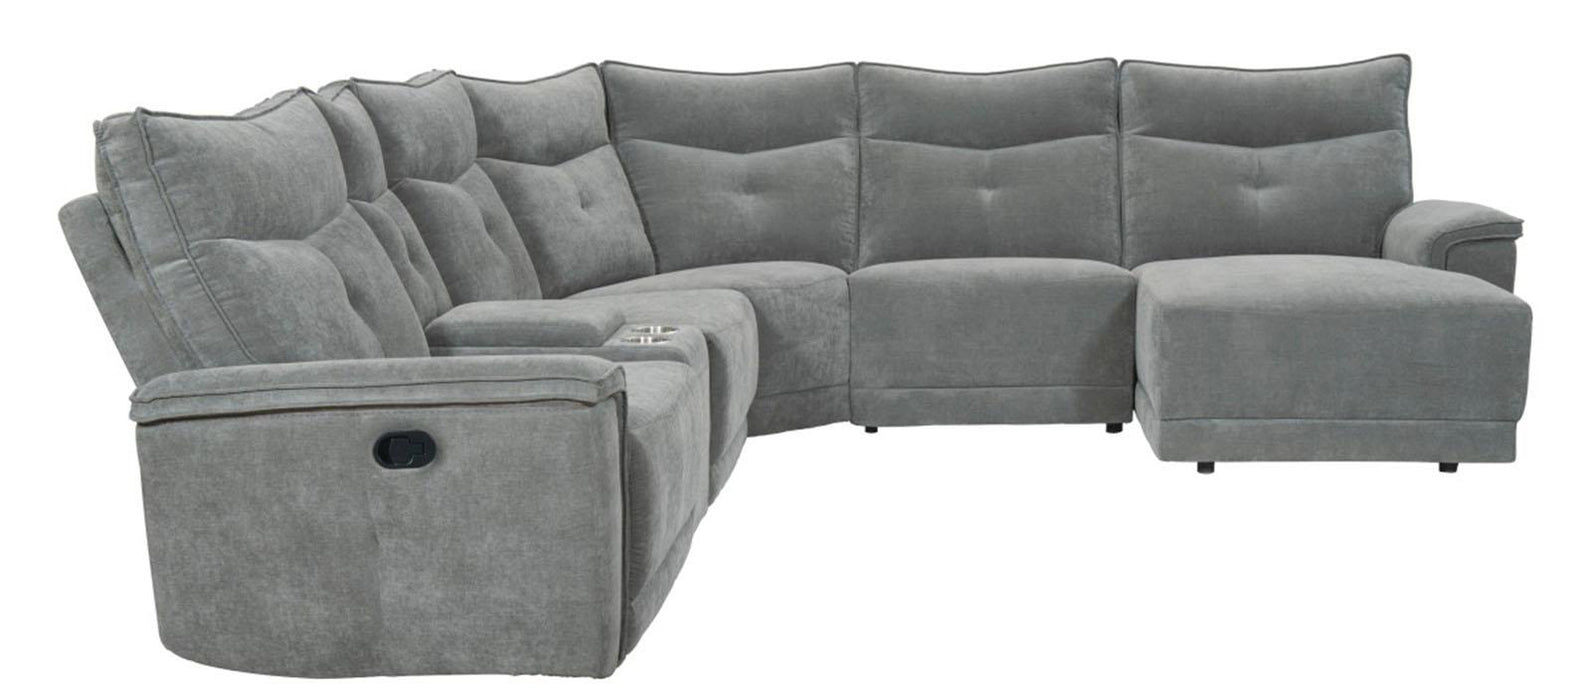 Homelegance Furniture Tesoro Corner Seat in Dark Gray 9509DG-CR